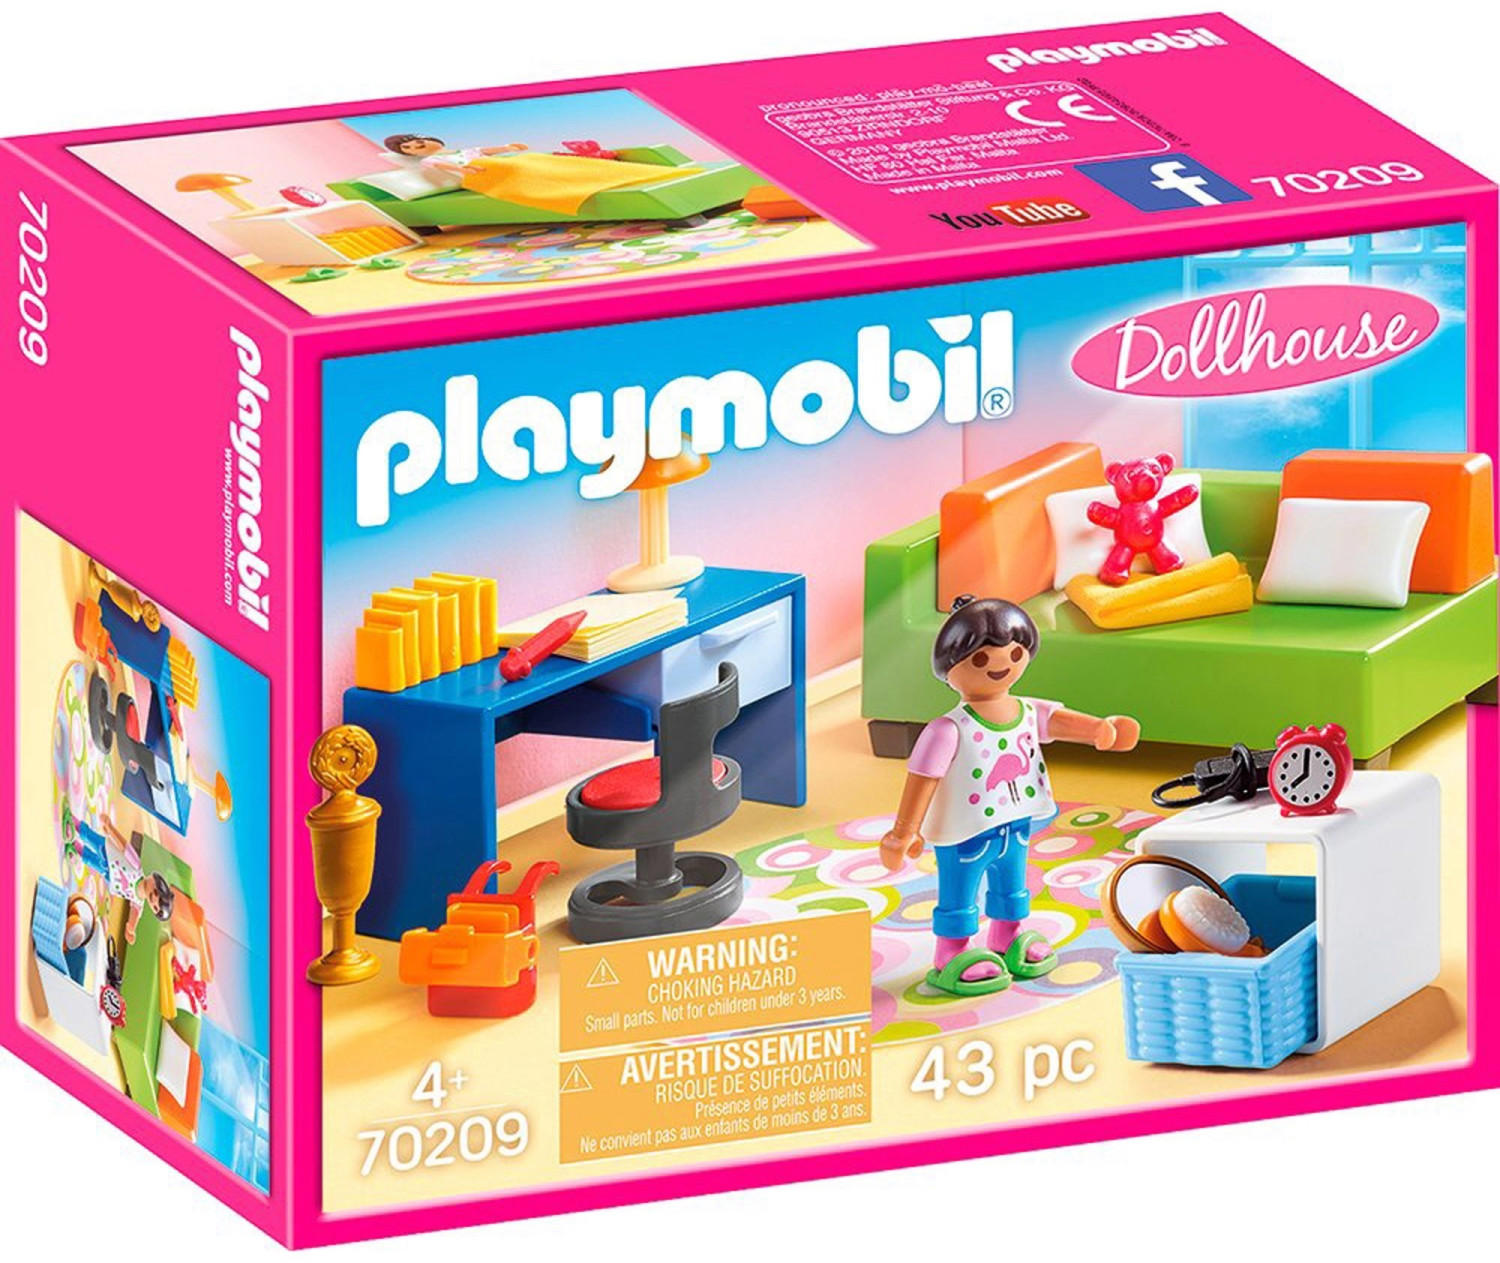 Playmobil Dollhouse - Teenager's Room (70209)